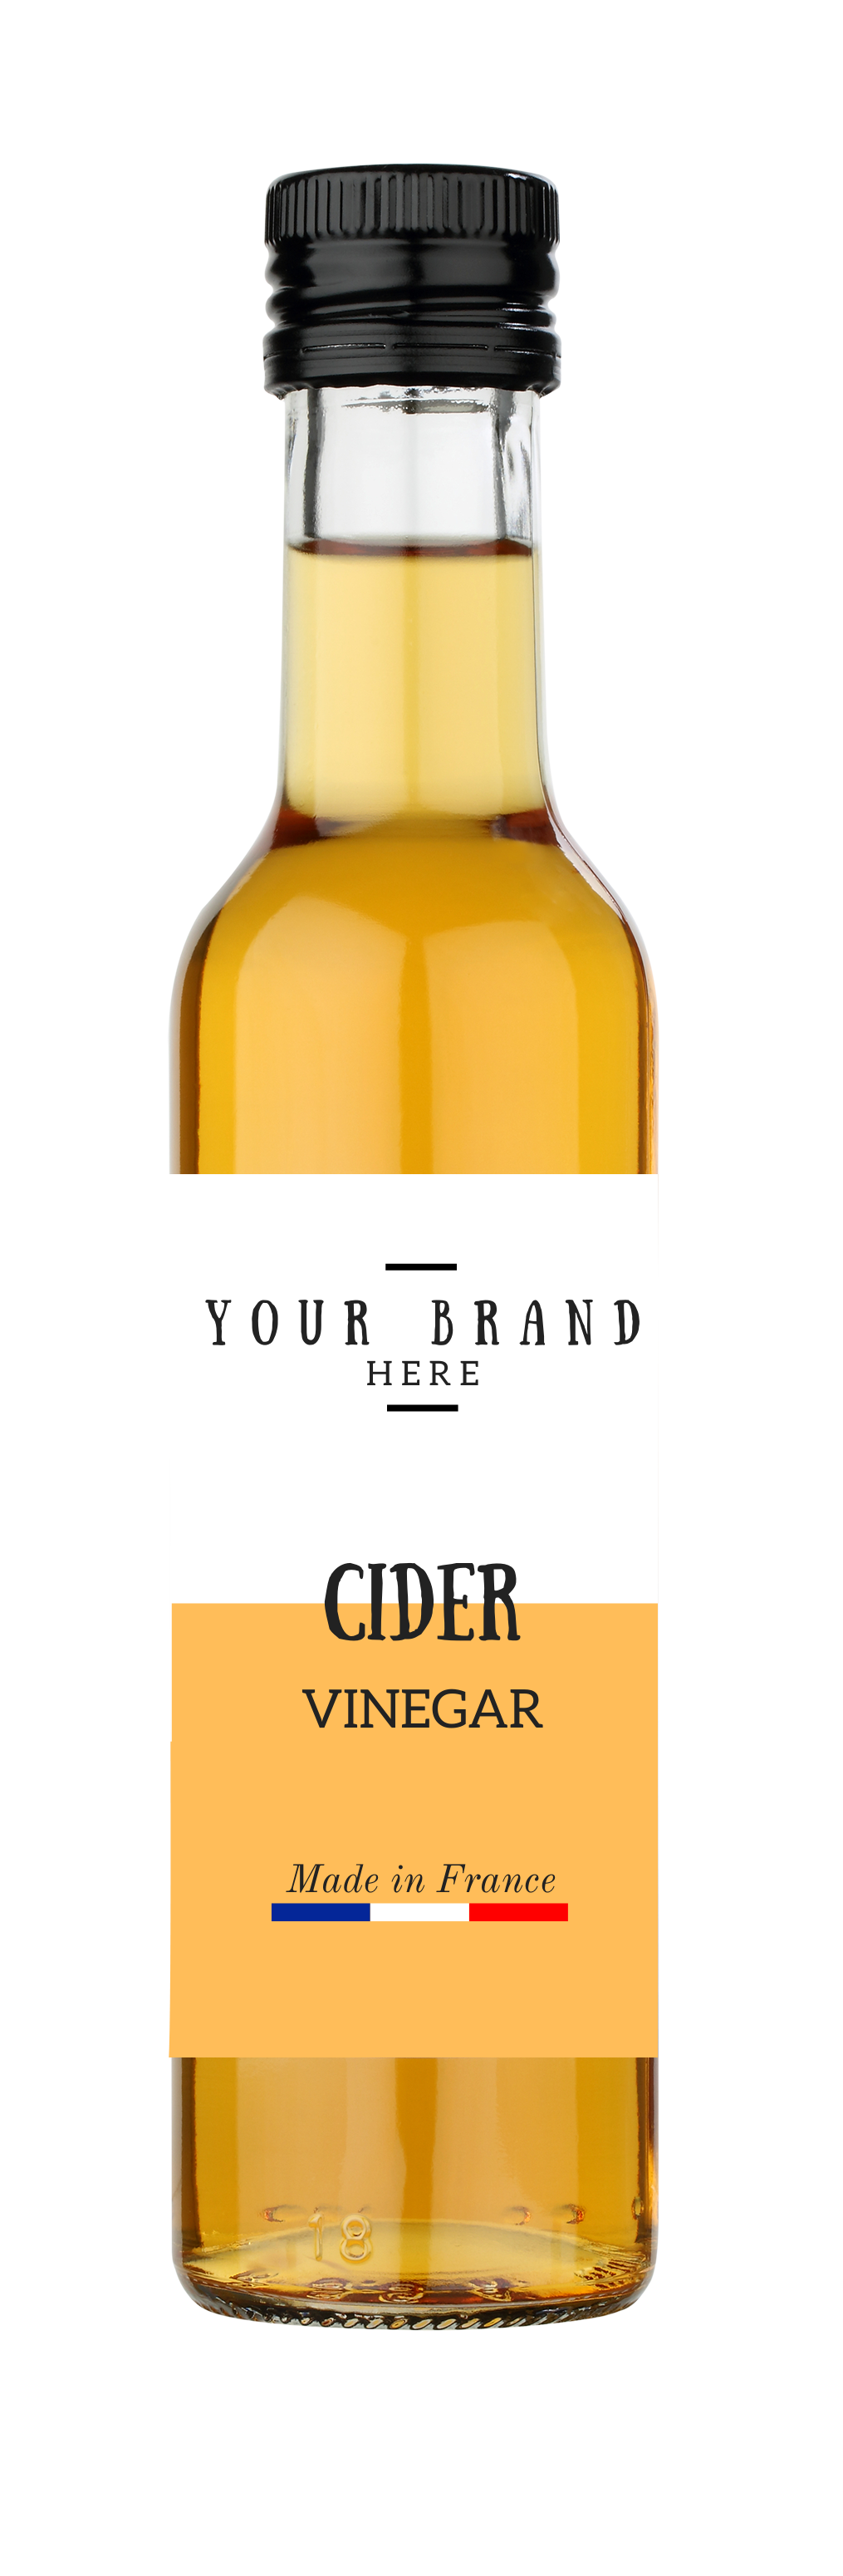 Cider Vinegar from Normandy	5%